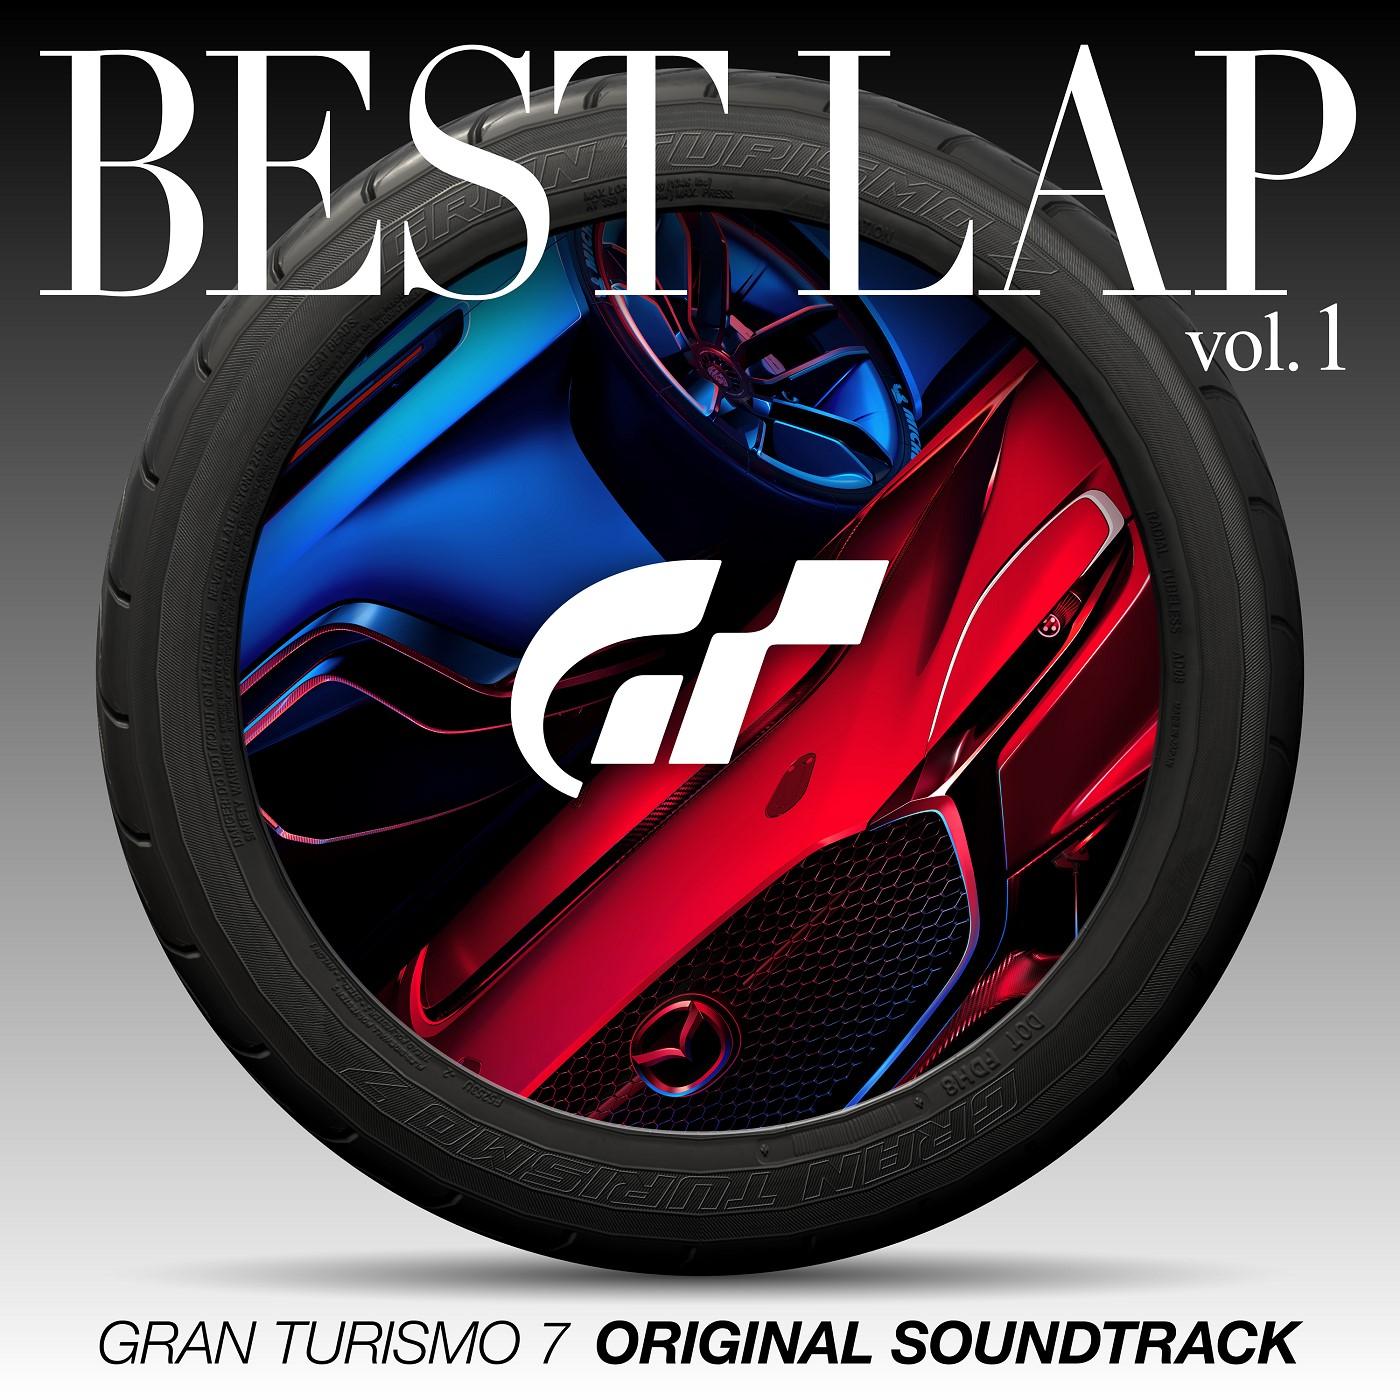 Gran Turismo 7 Original Soundtrack Best Lap Vol.1